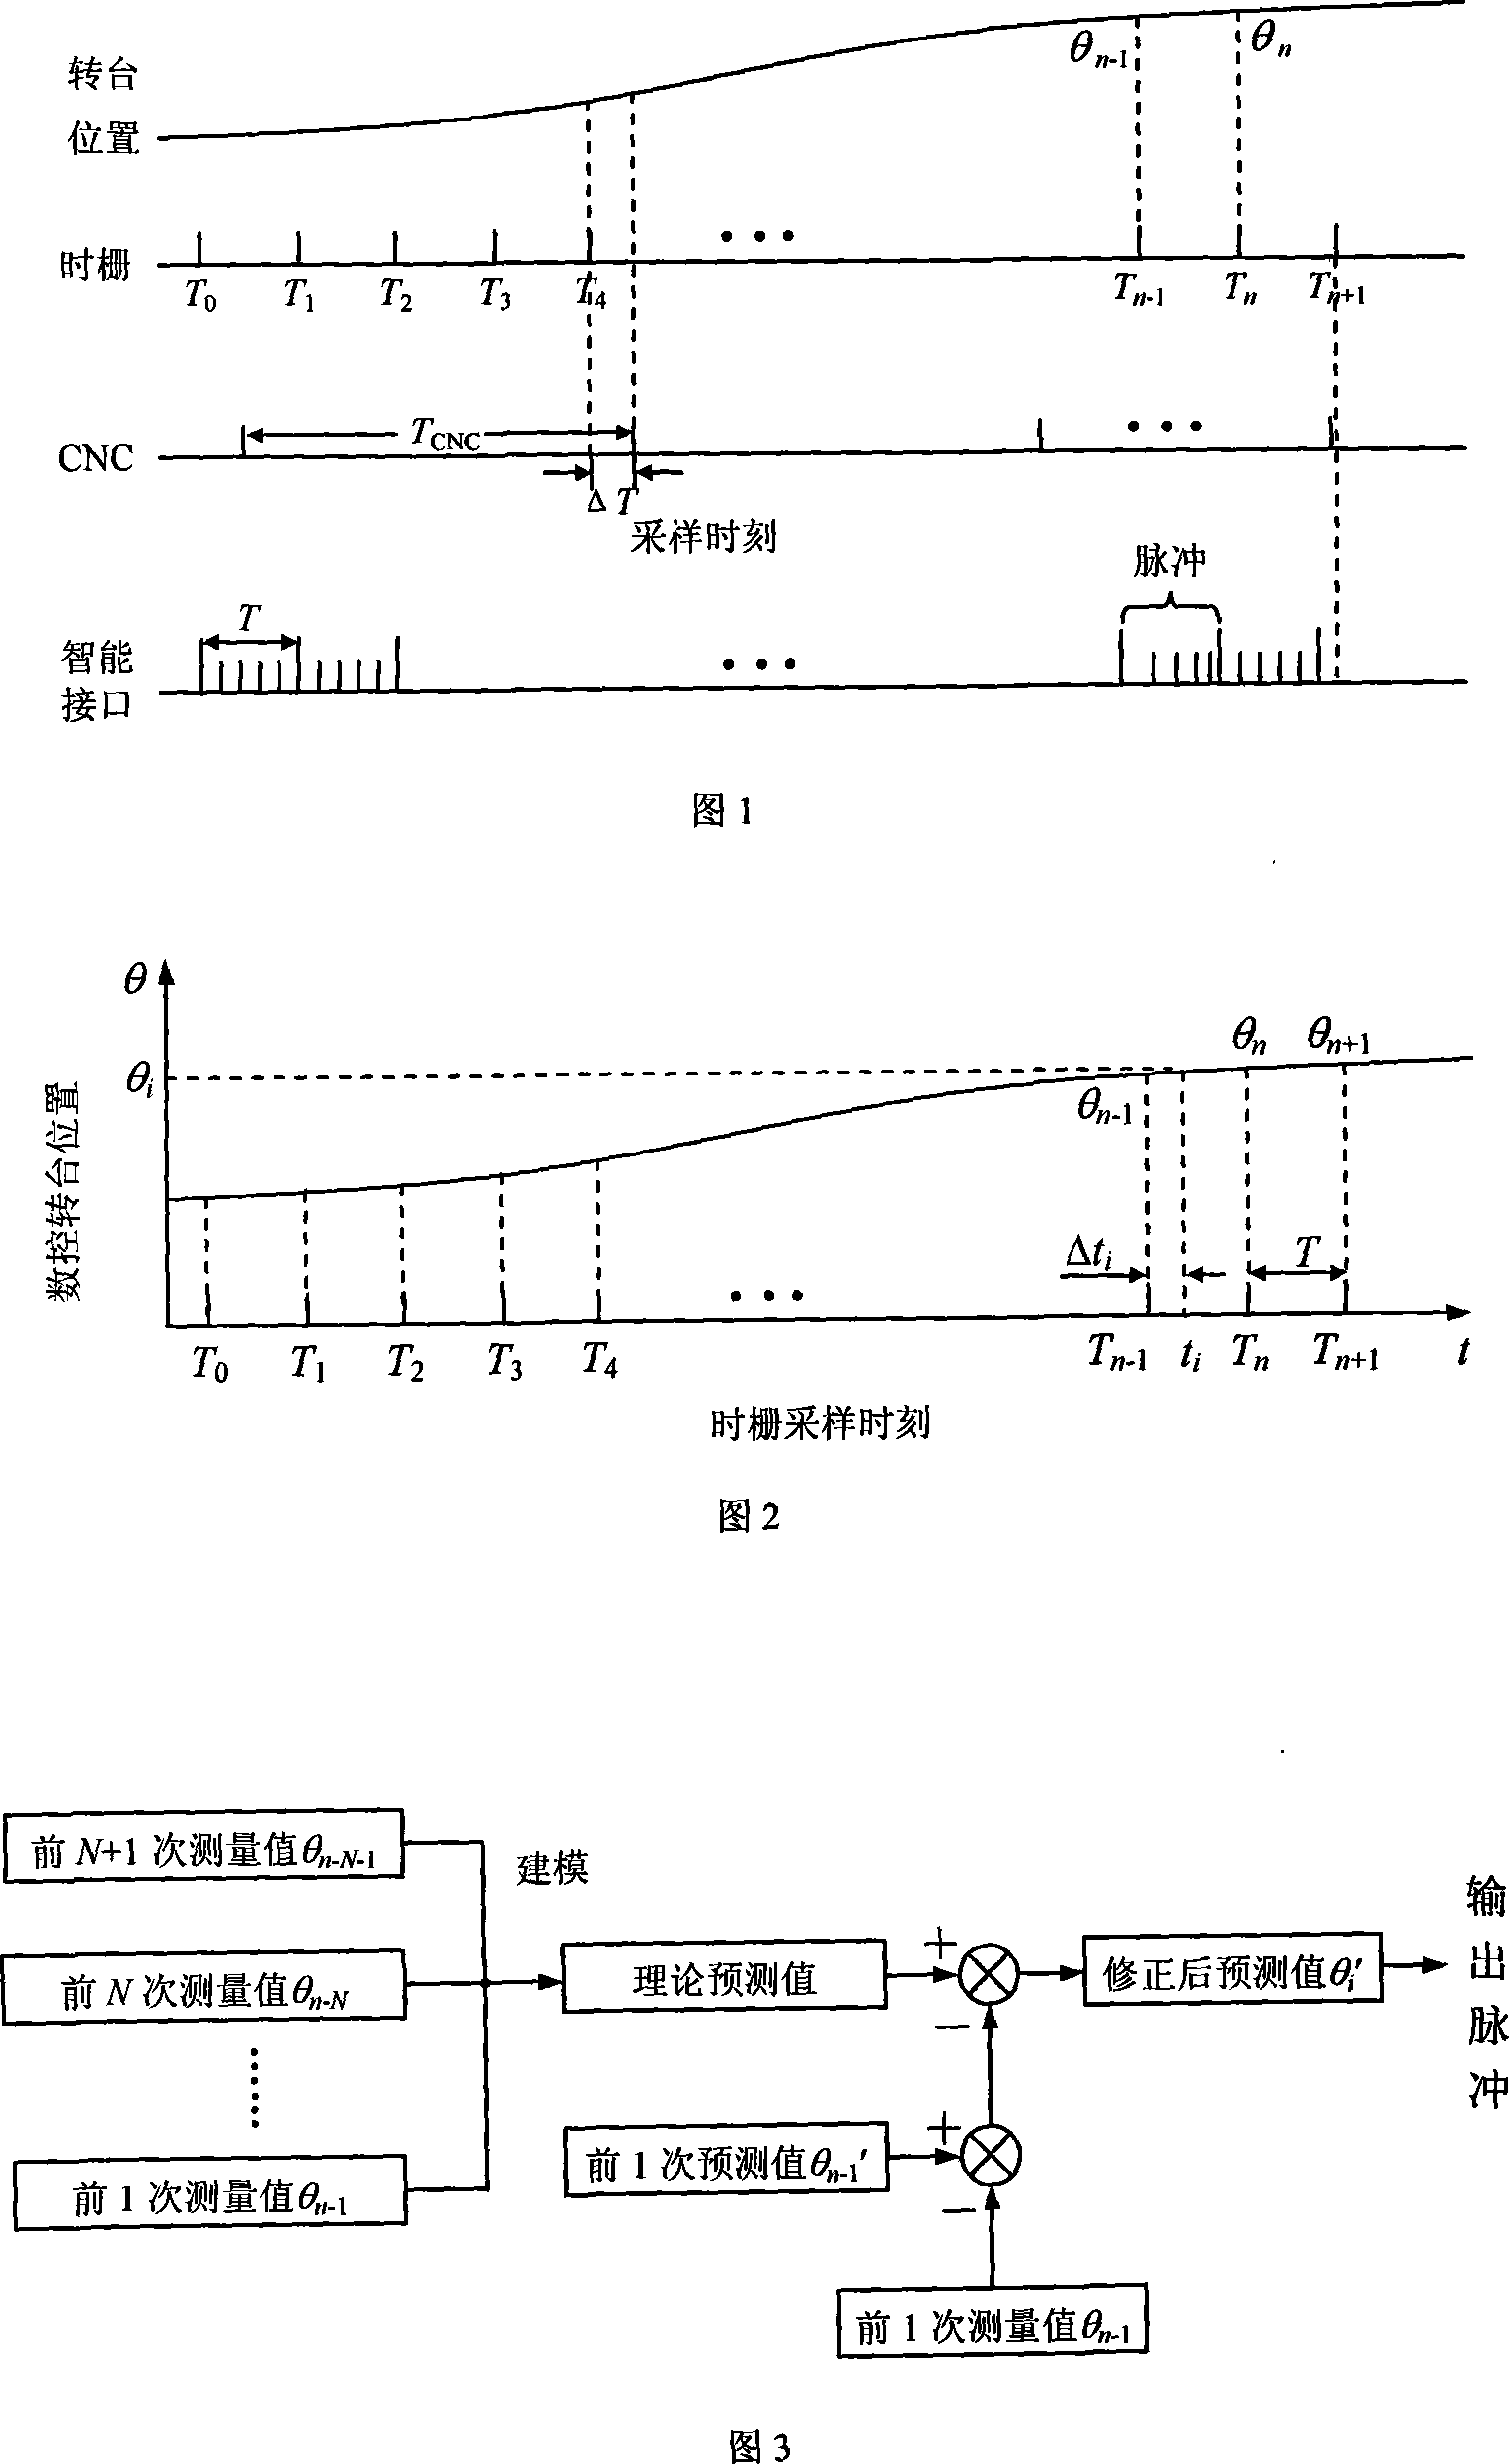 Method for realizing numerical control rotating platform angular displacement forecast measurement using time gate displacement sensor